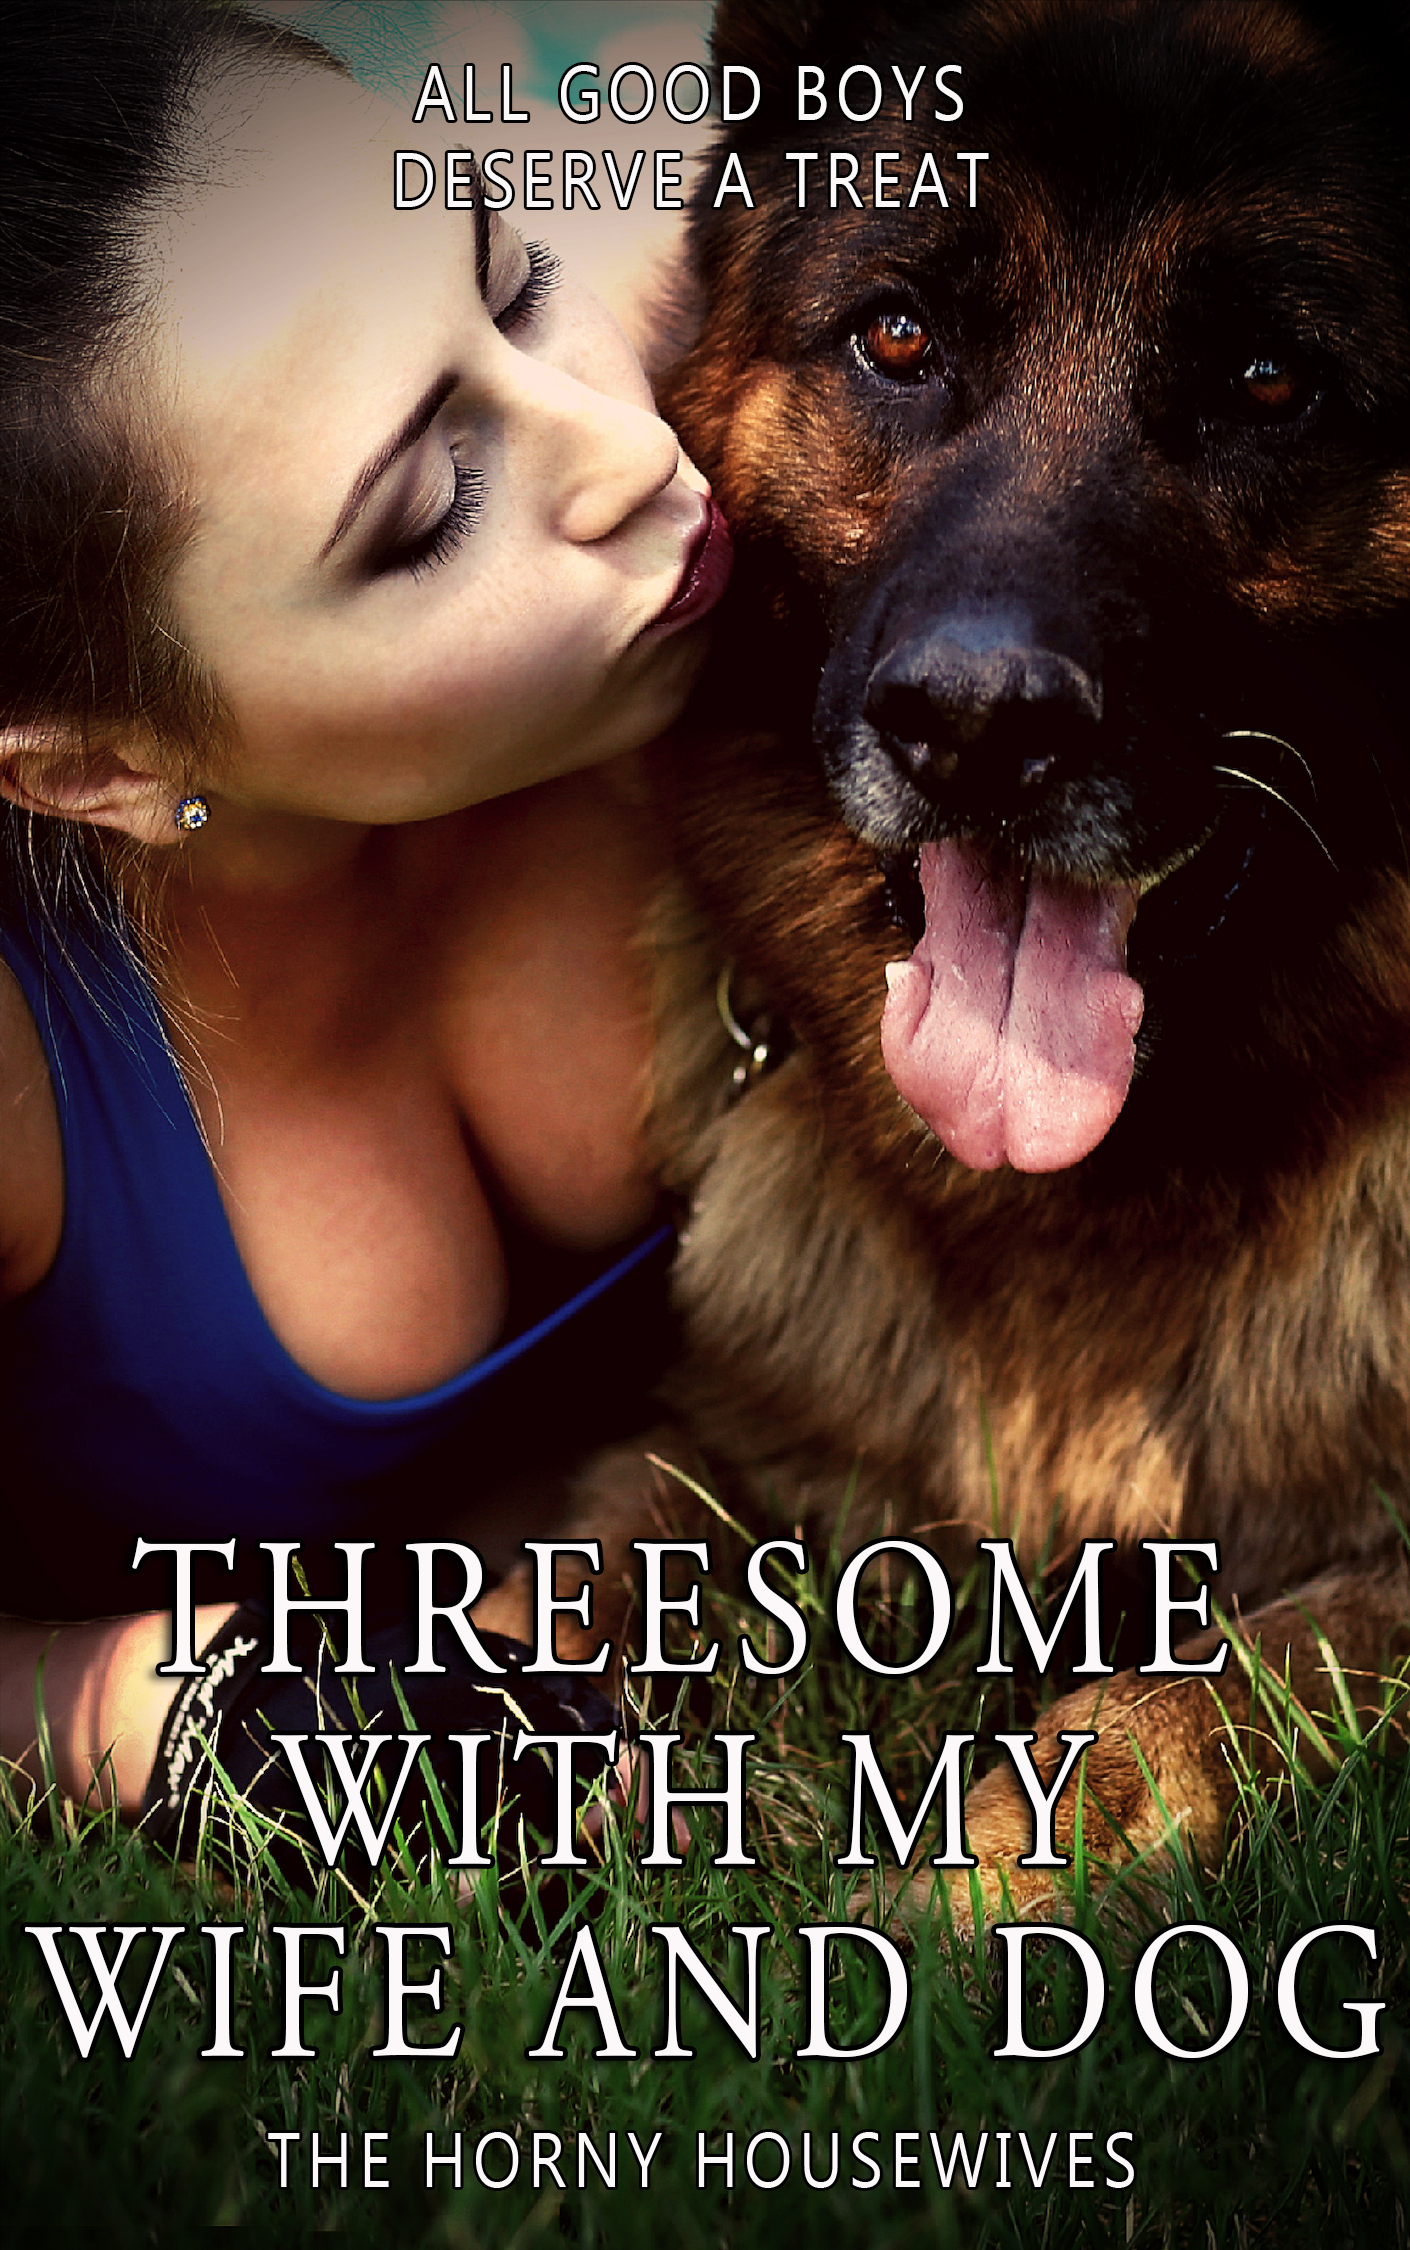 Dog threesome We love